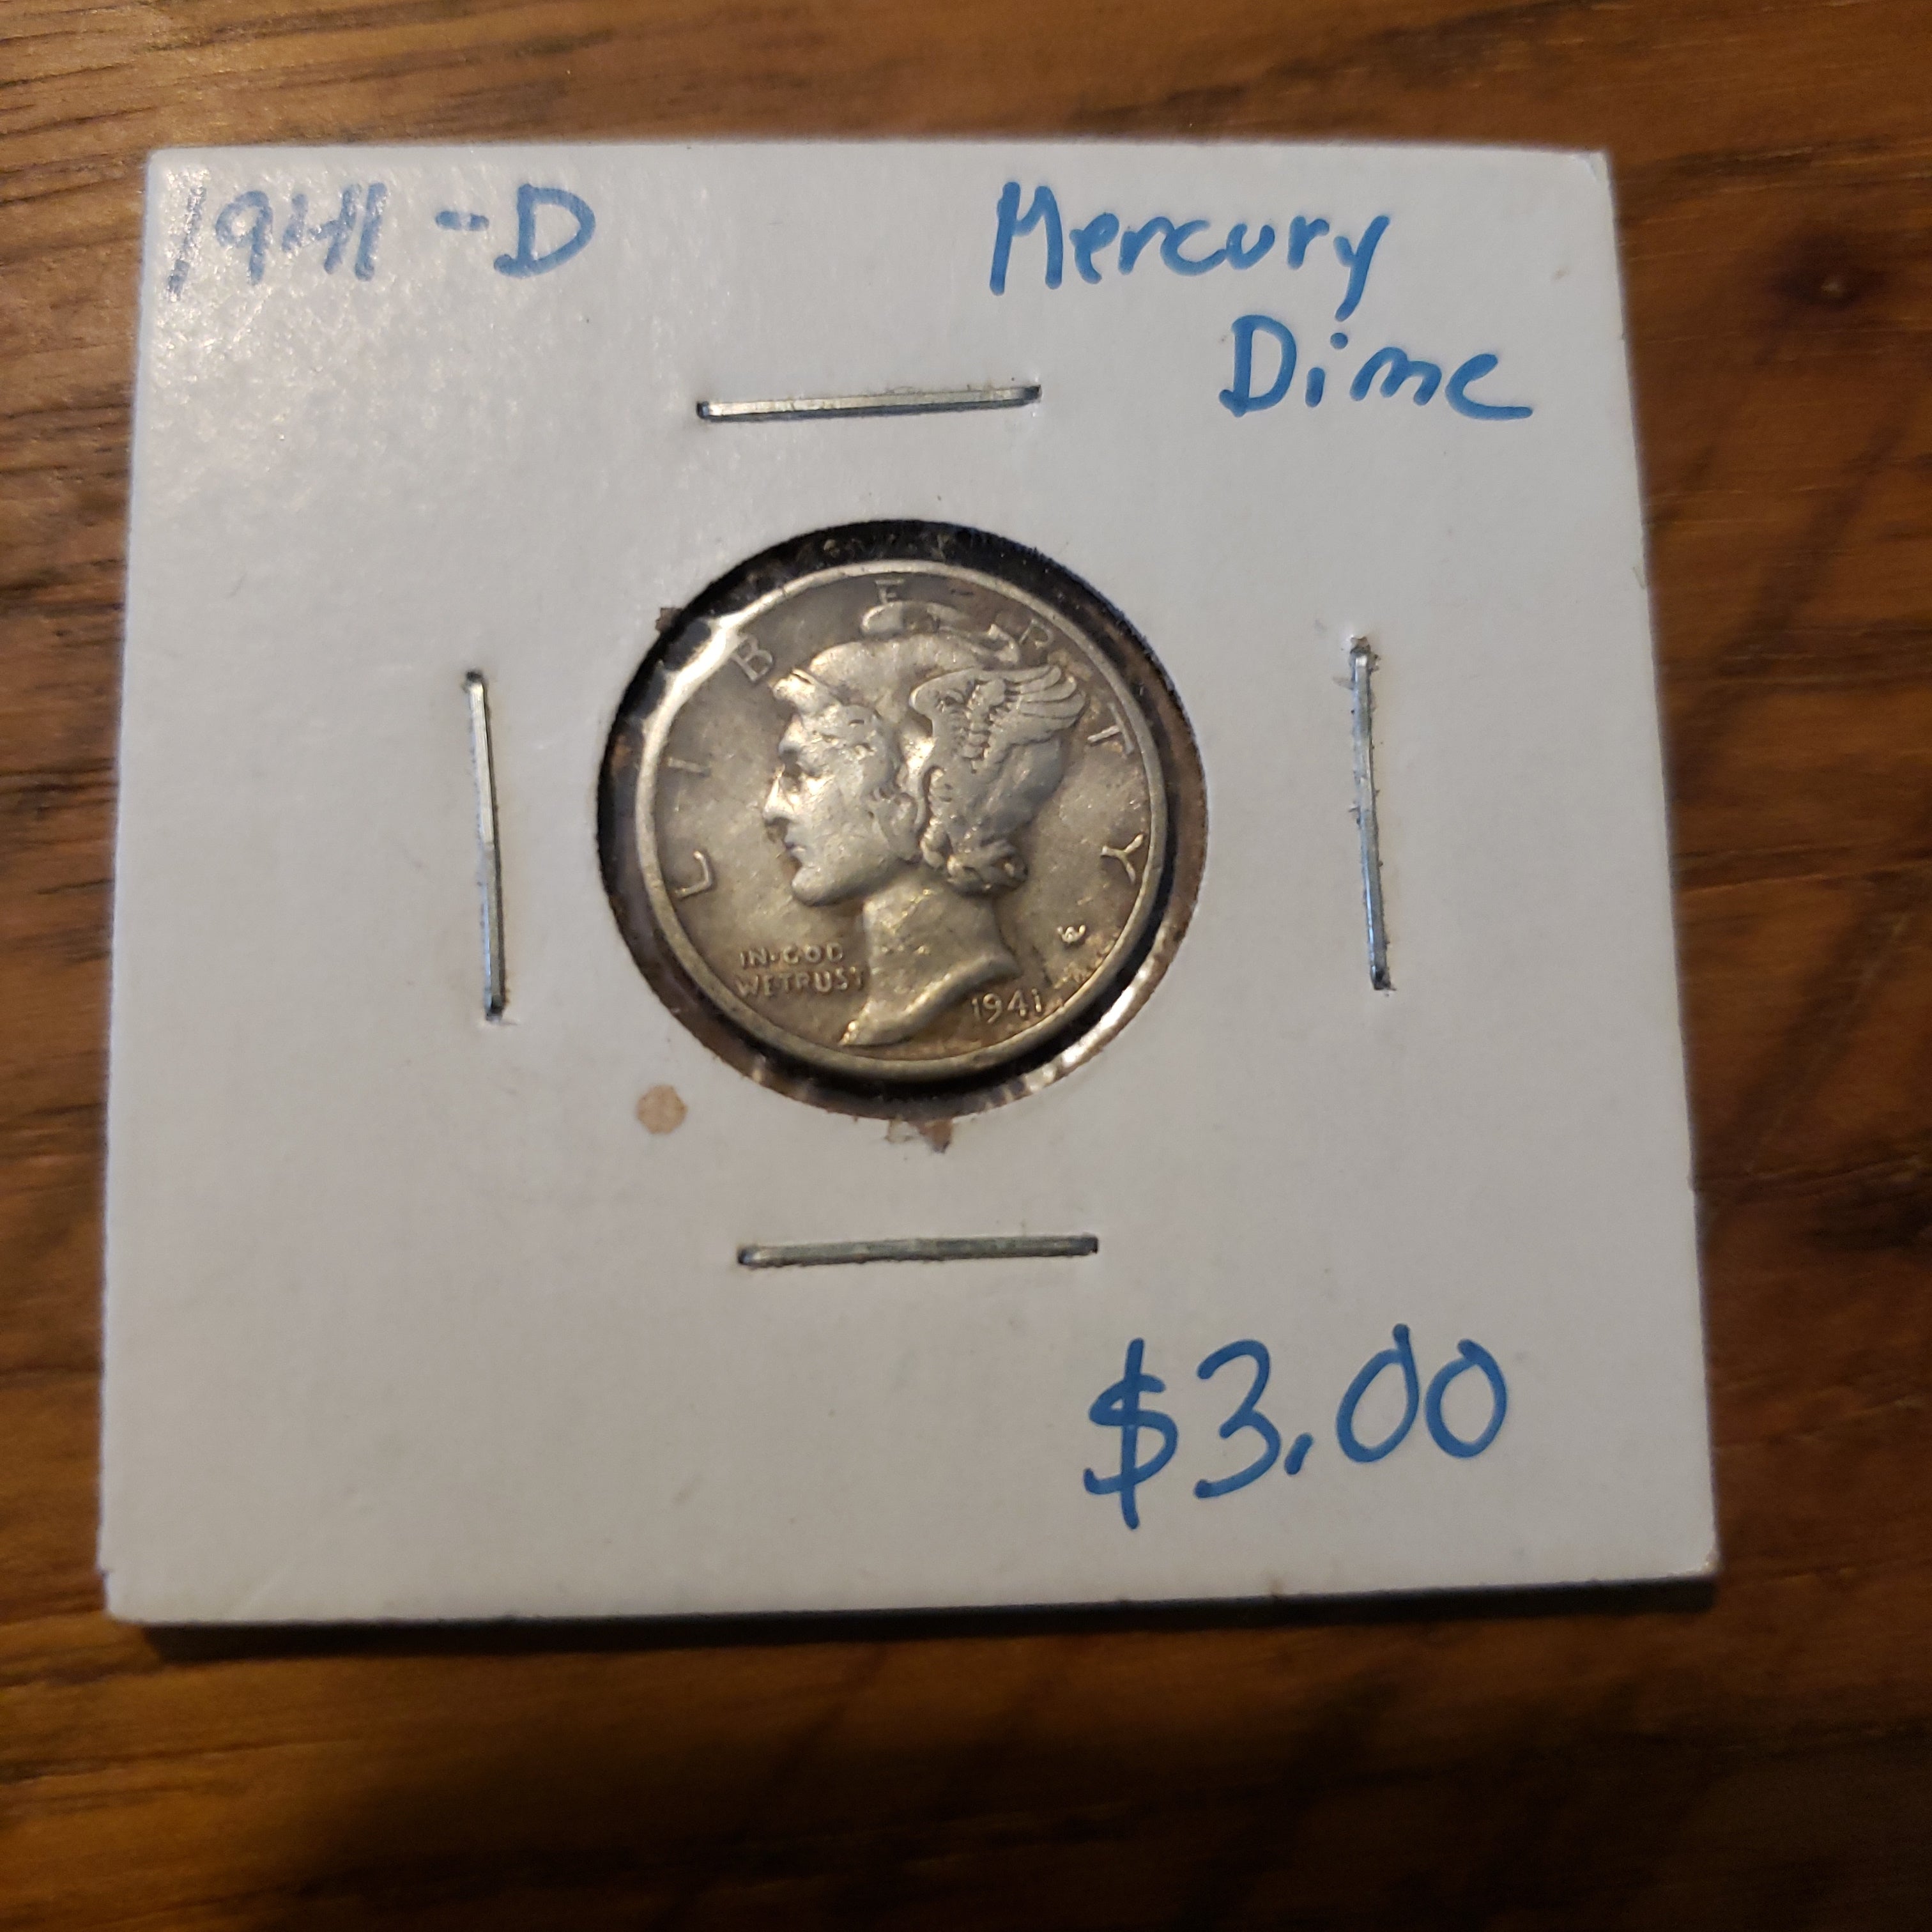 1941 - D Mercury Dime – Wray's Treasure Shop